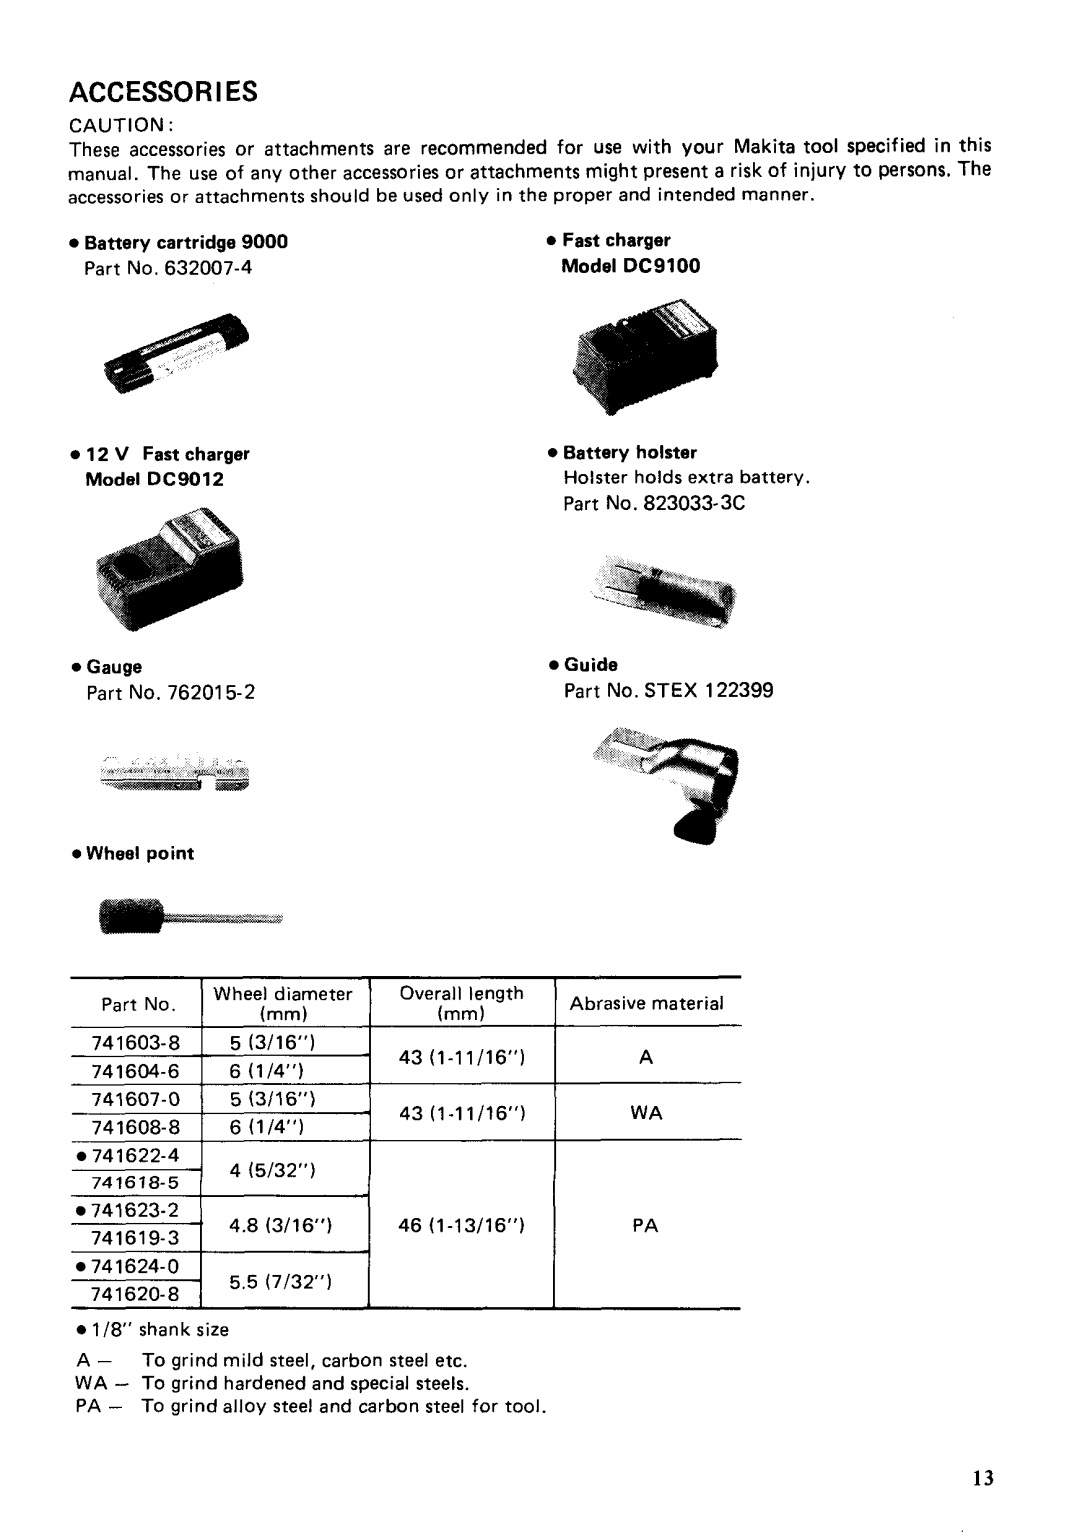 Makita 903D Accessories, e Battery cartridge, e Fast charger, Model DC9100, e 12 V Fast charger Model DC9012 e Gauge 